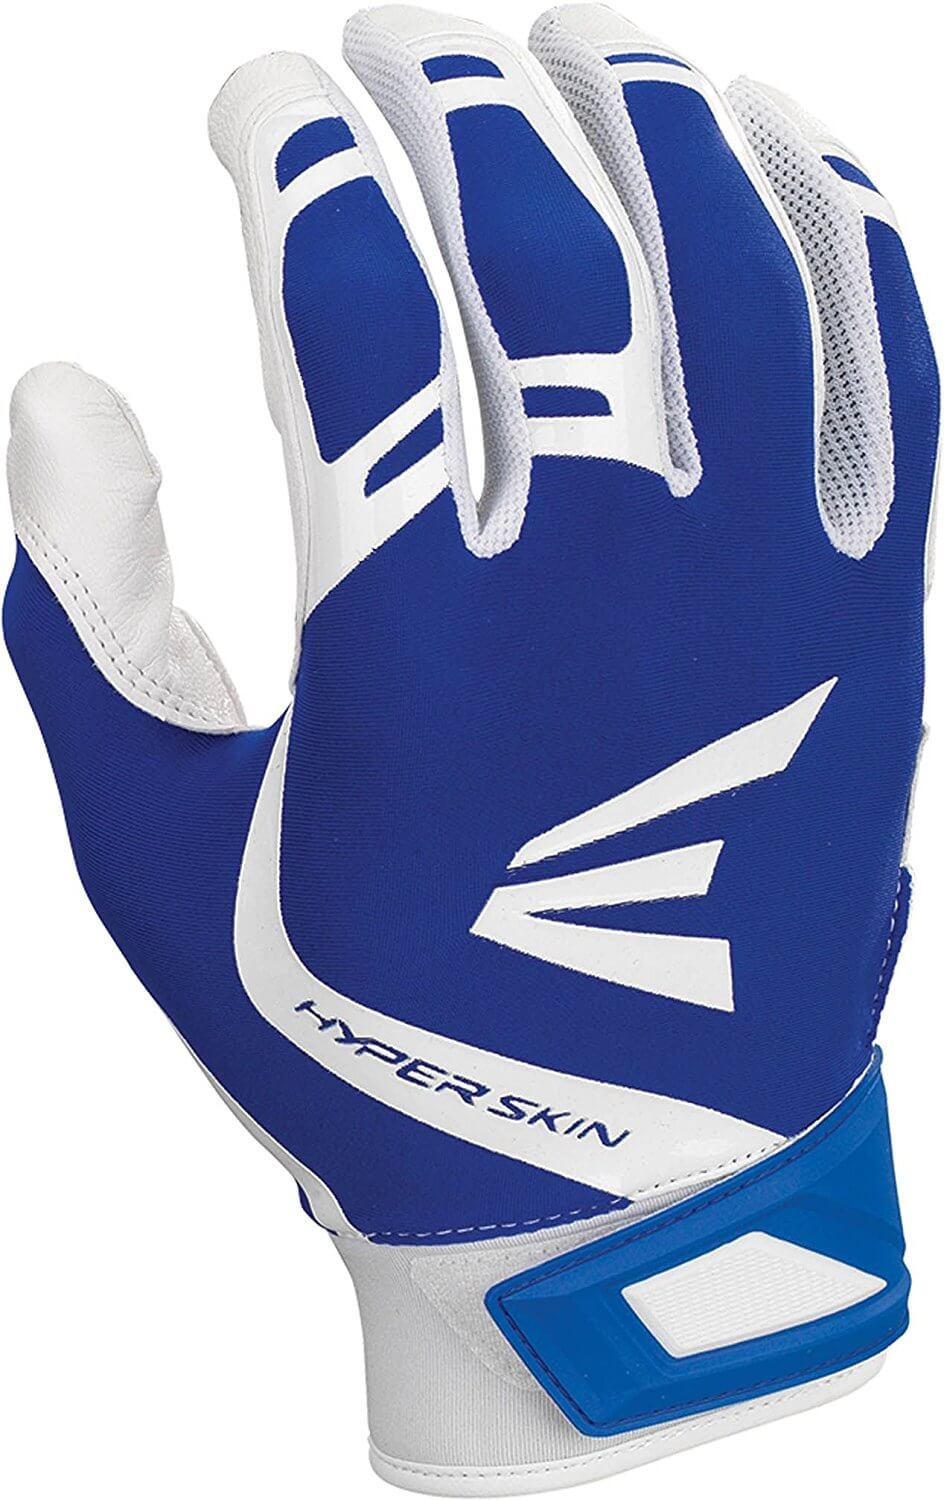 Easton ZF7-VRS Fastpitch Batting Gloves